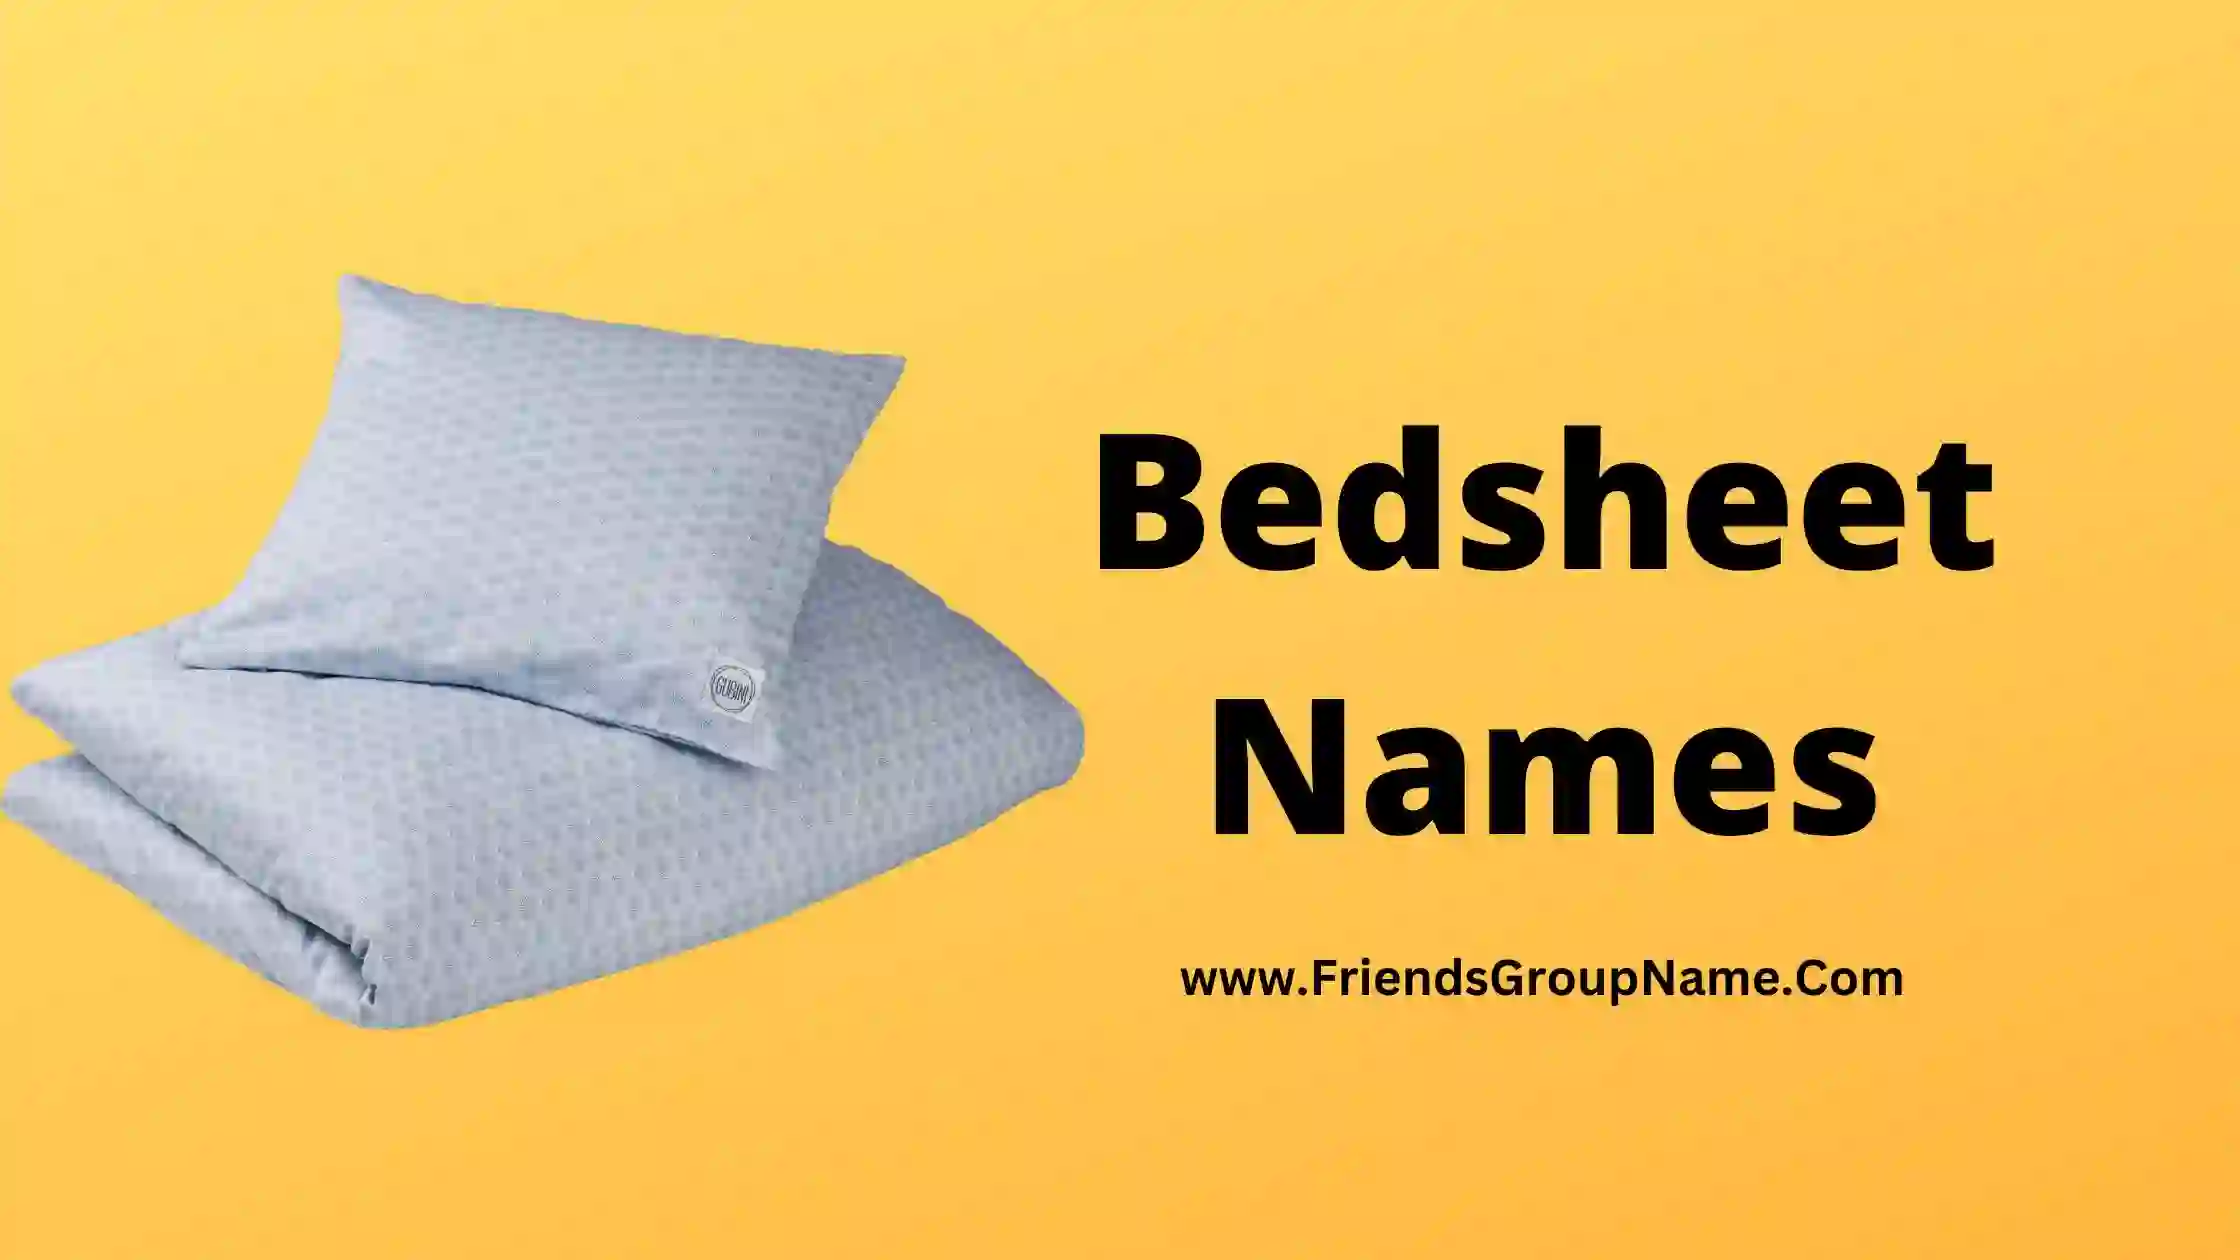 Bedsheet Names